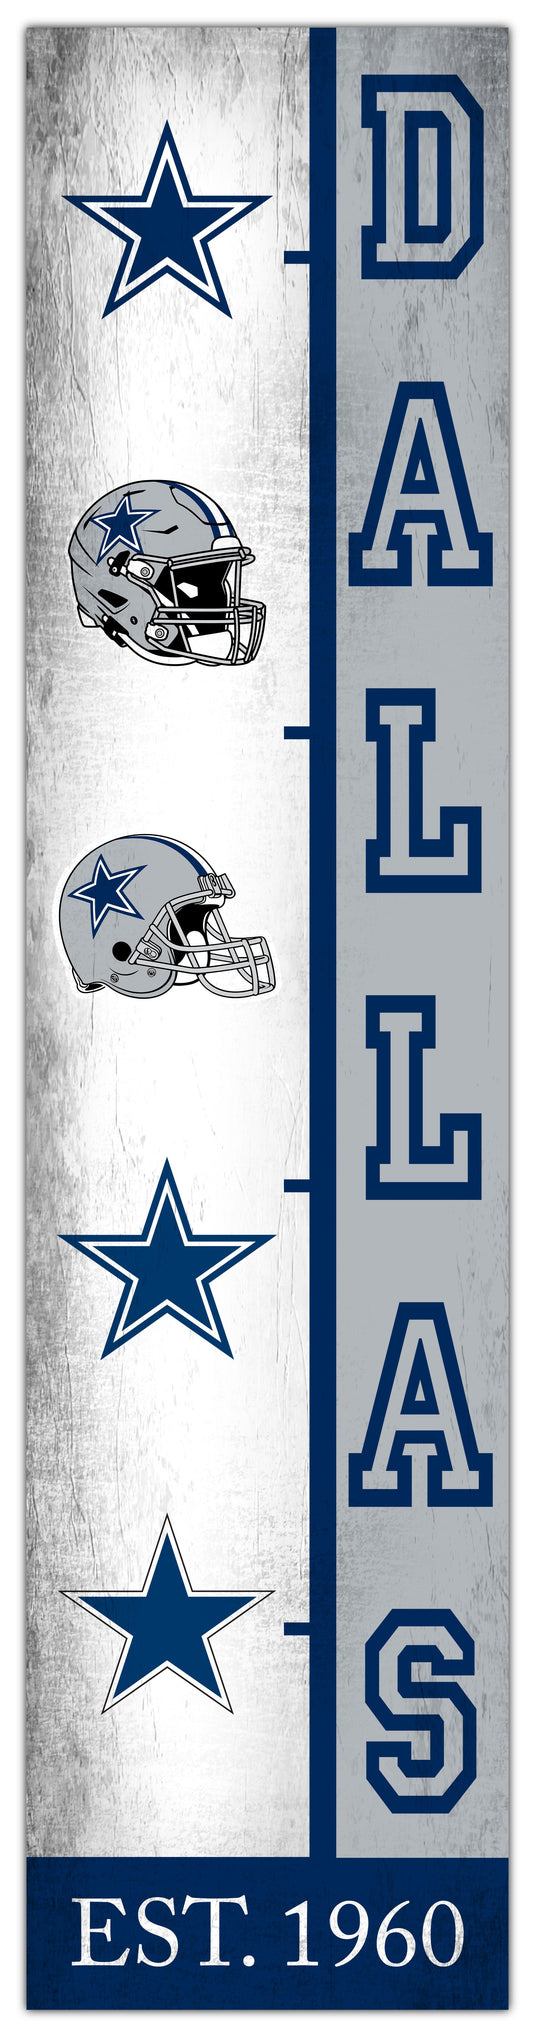 Fan Creations Home Decor Dallas Cowboys Team Logo Progression 6x24